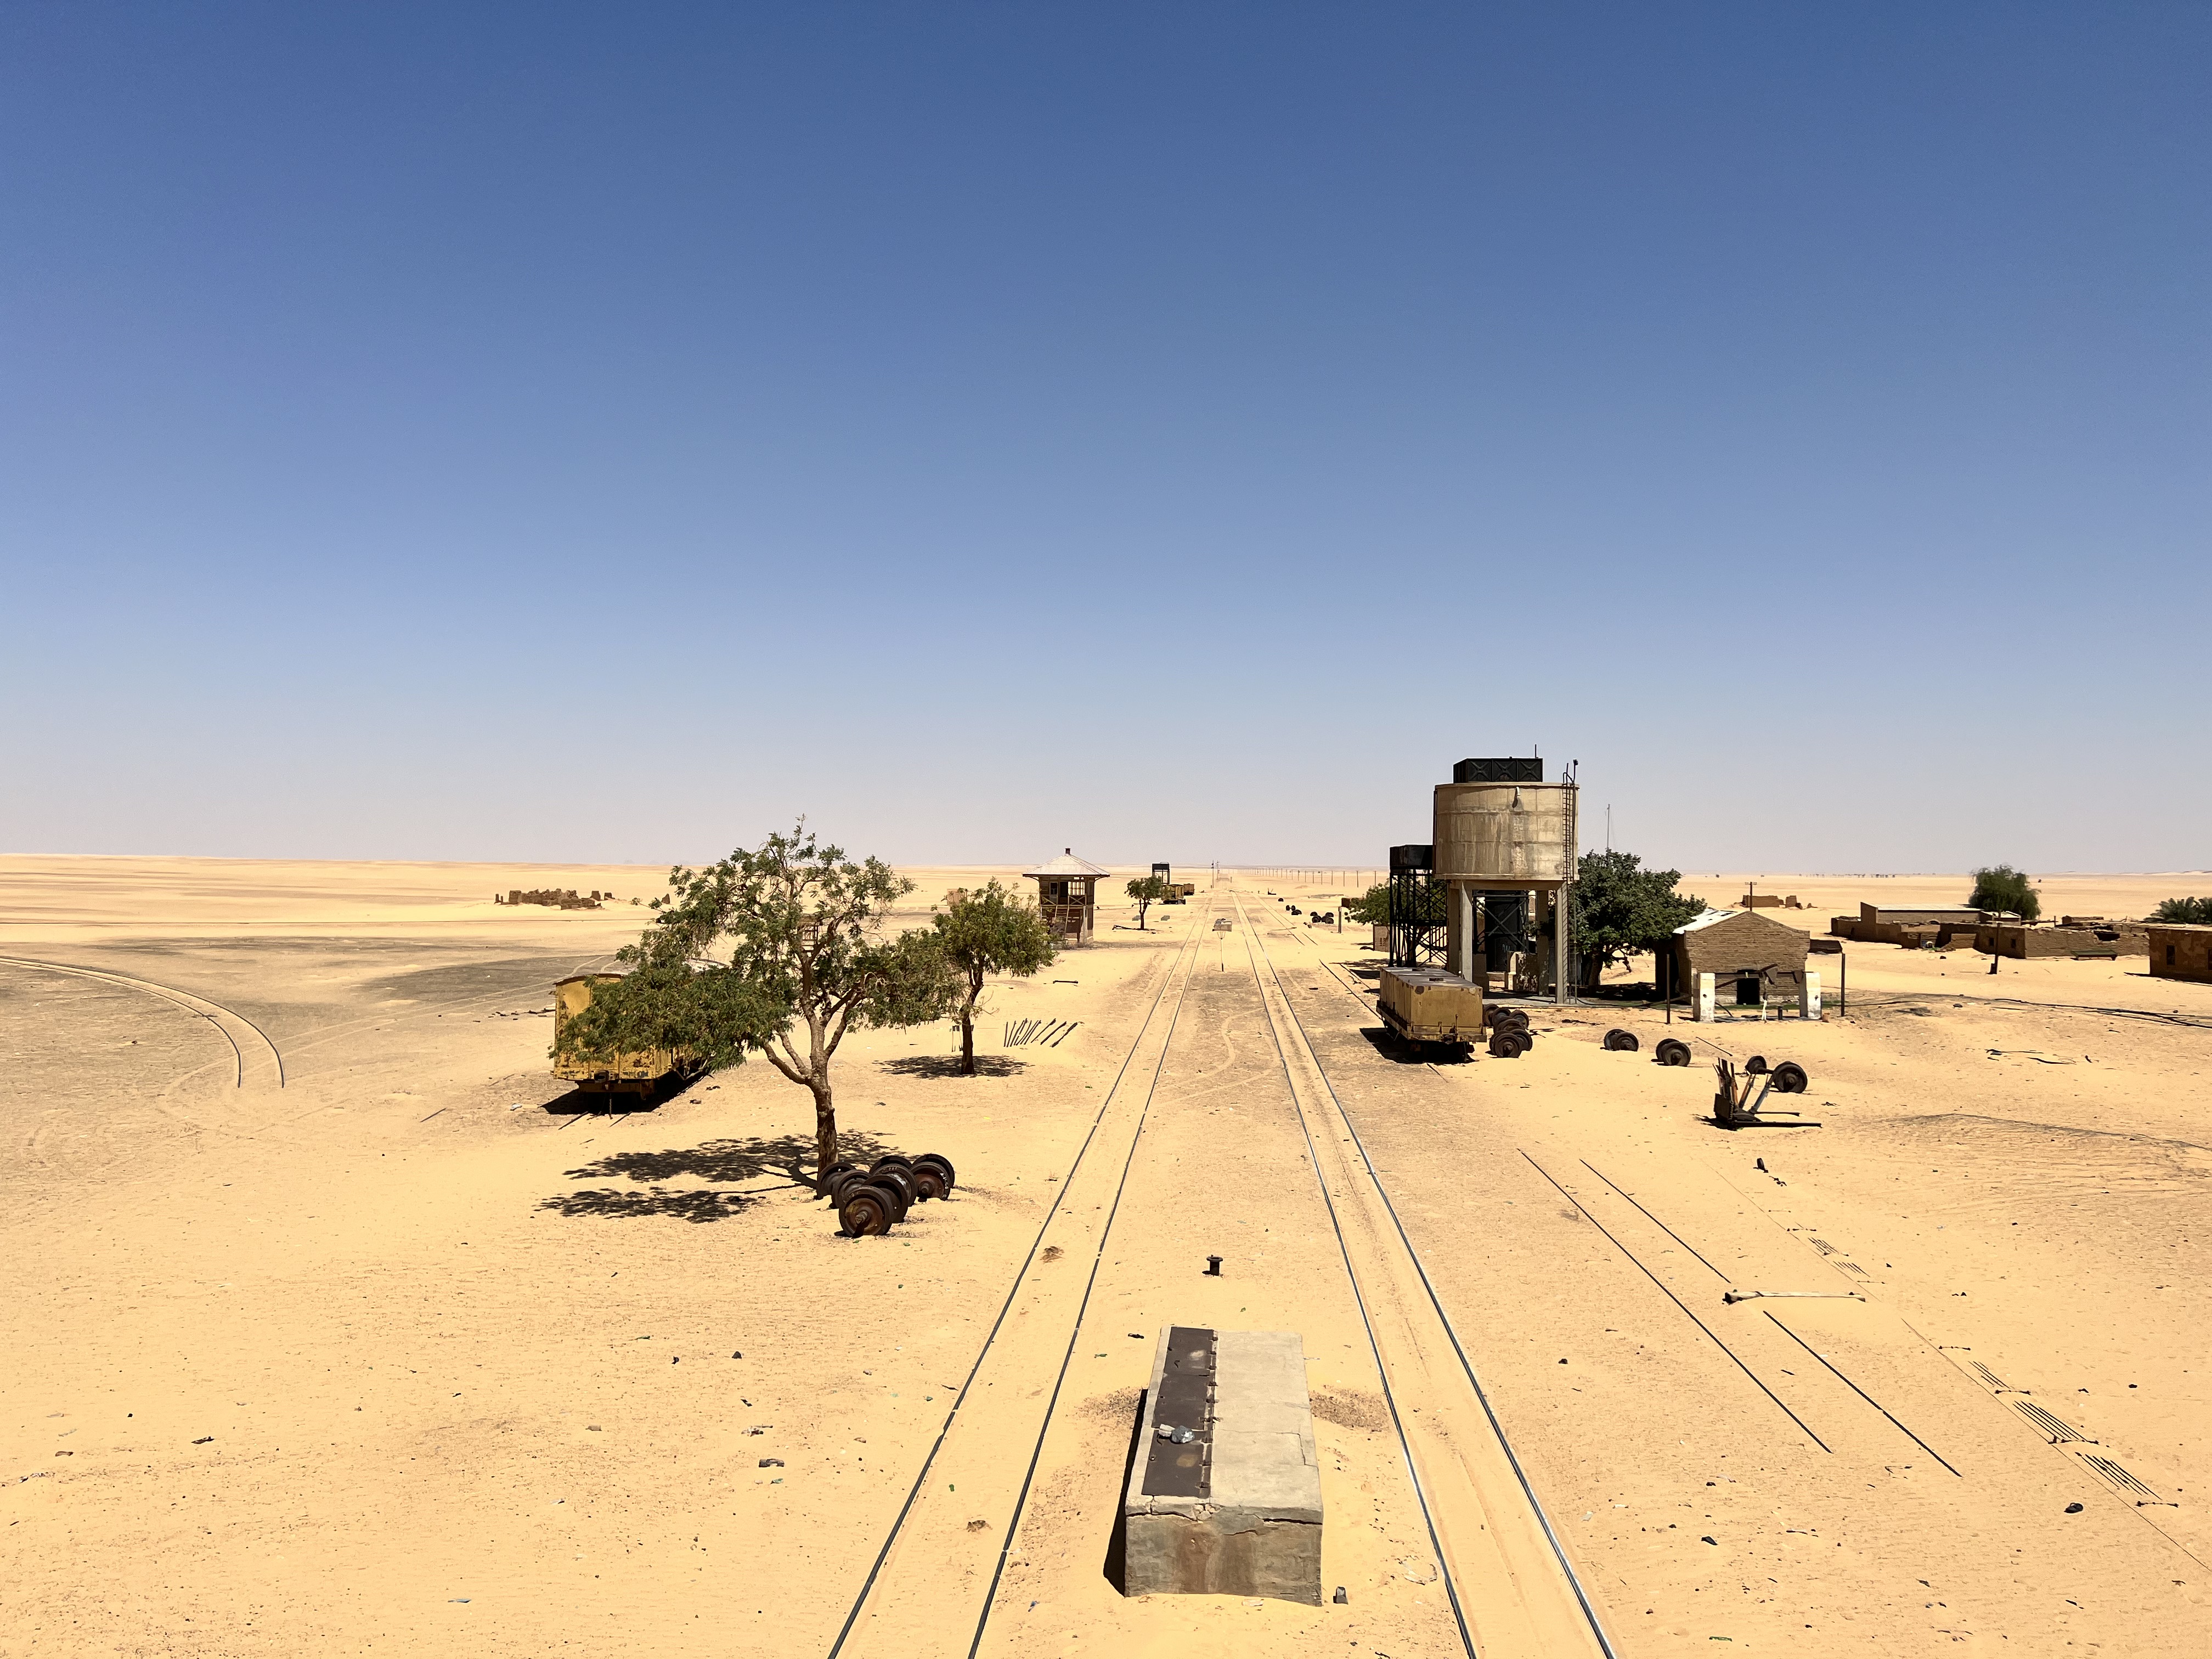 Station 6, Northern Sudan